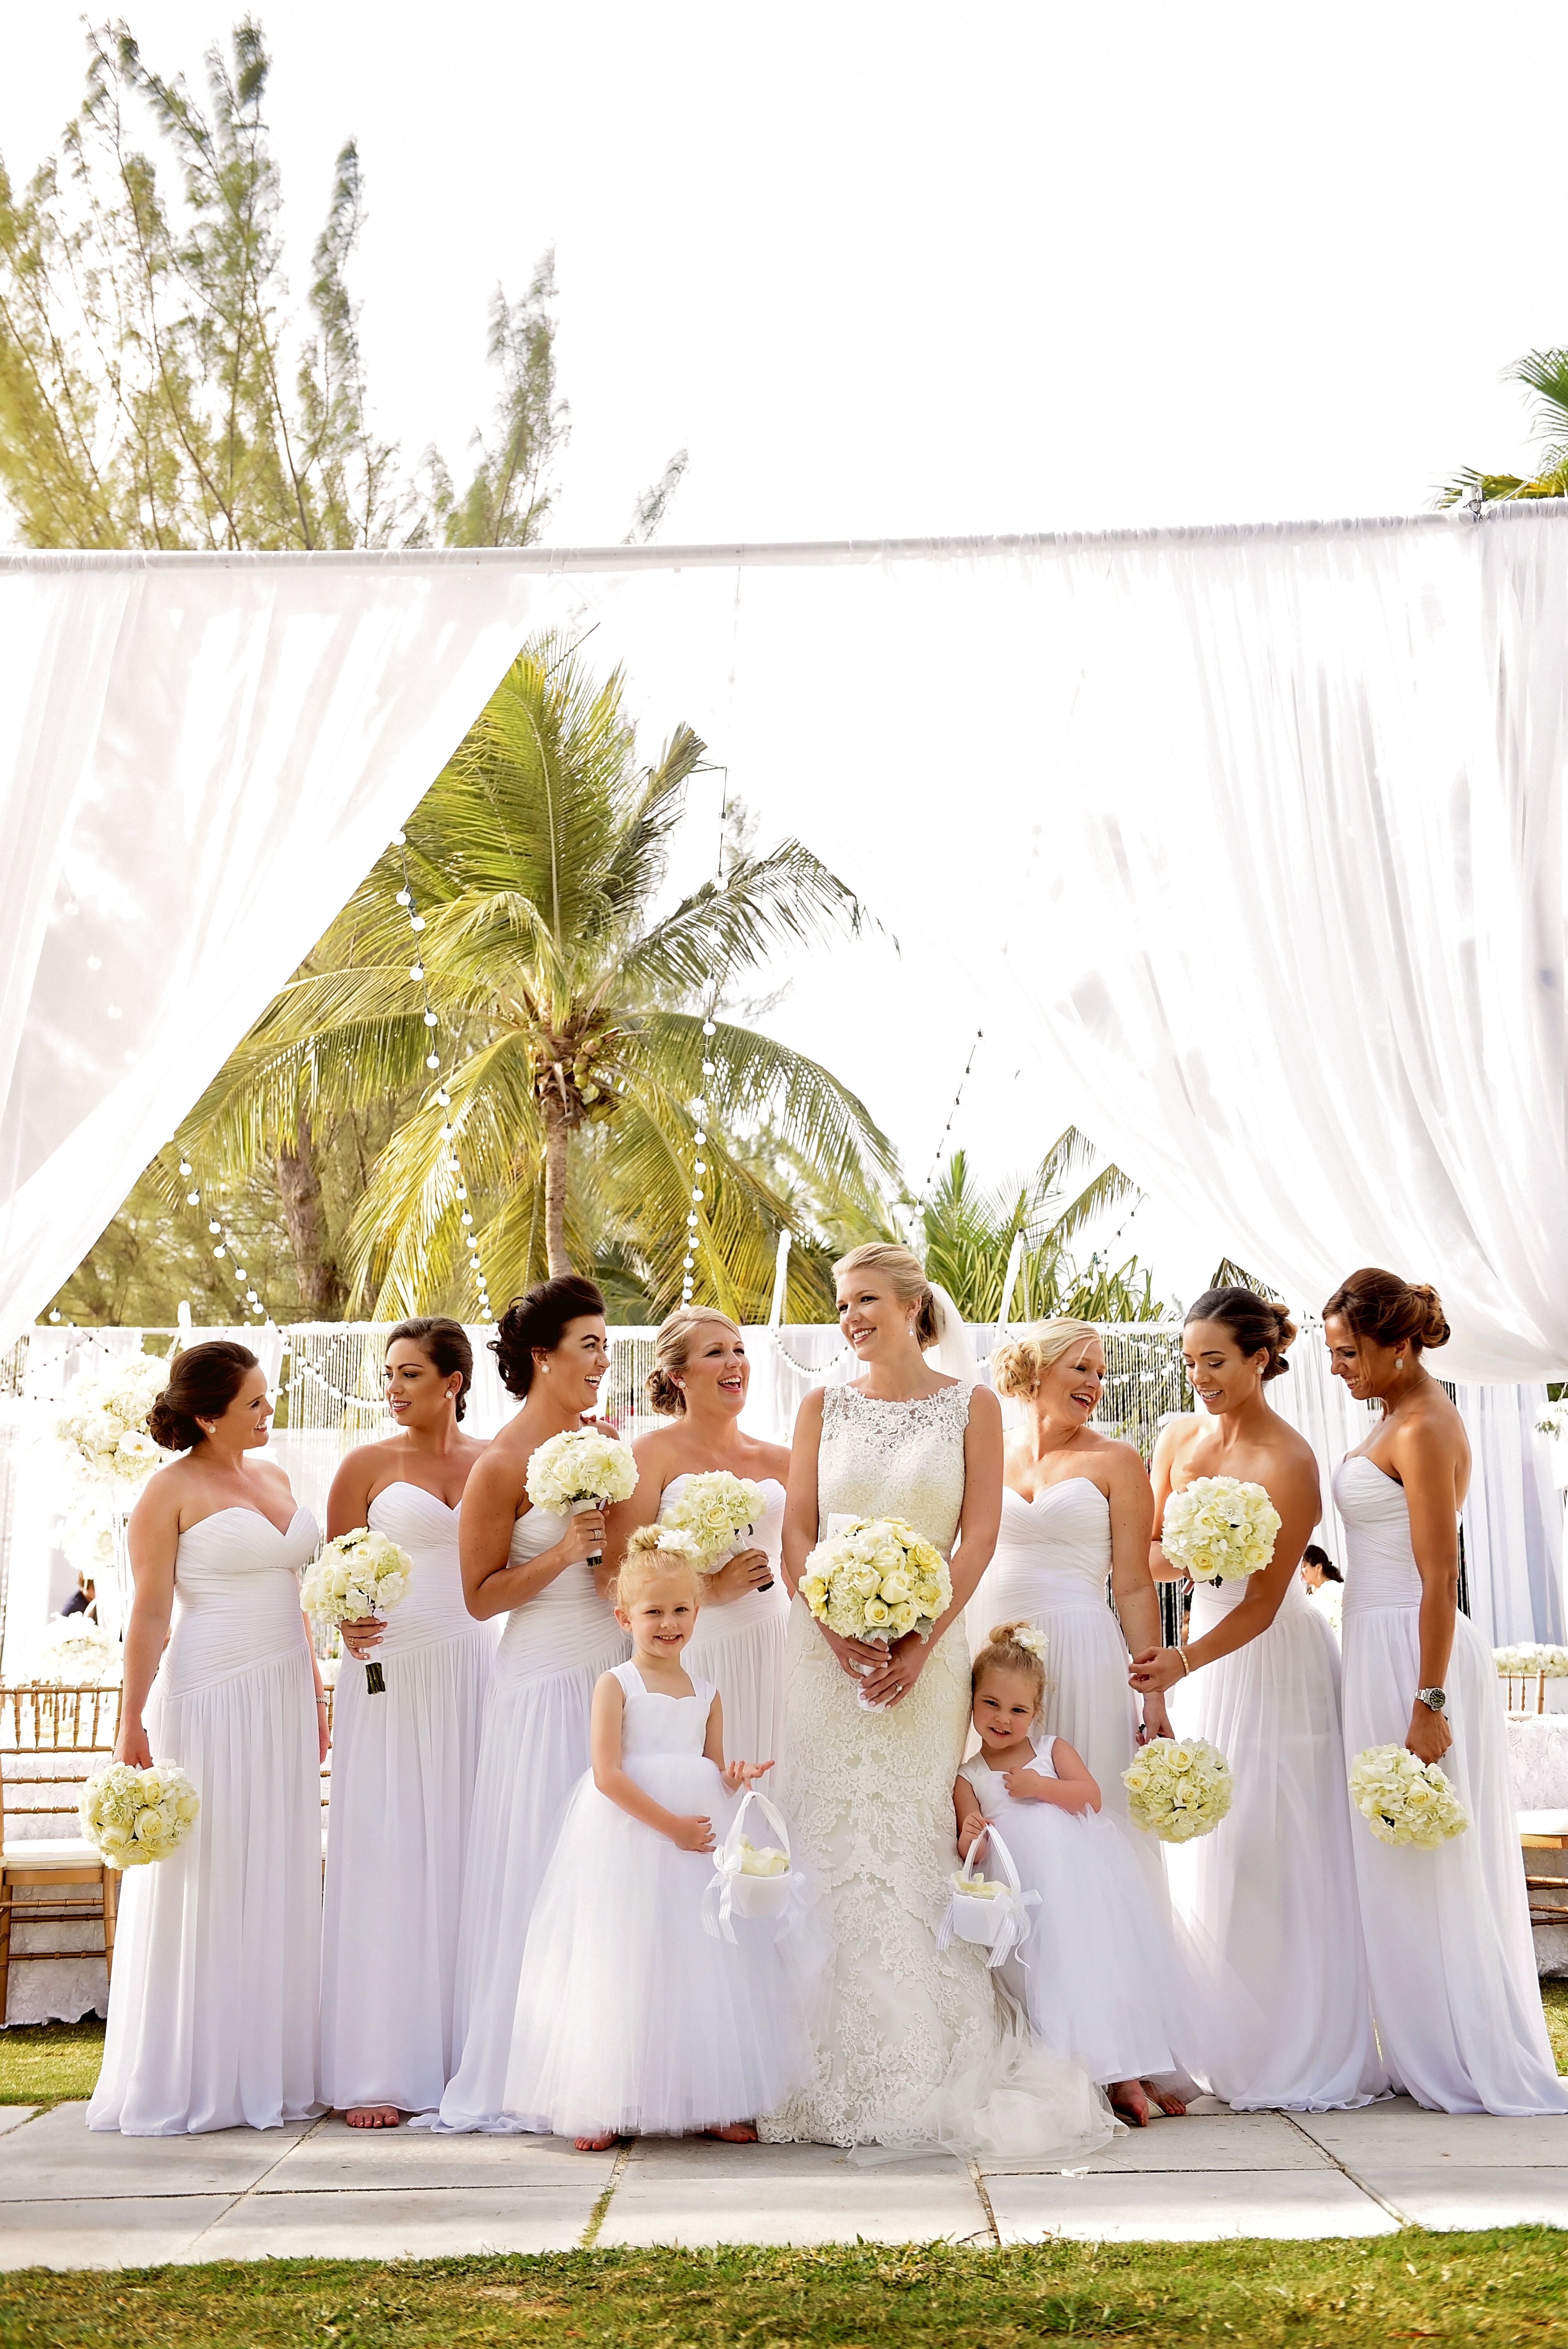 white bridesmaid dresses for beach wedding